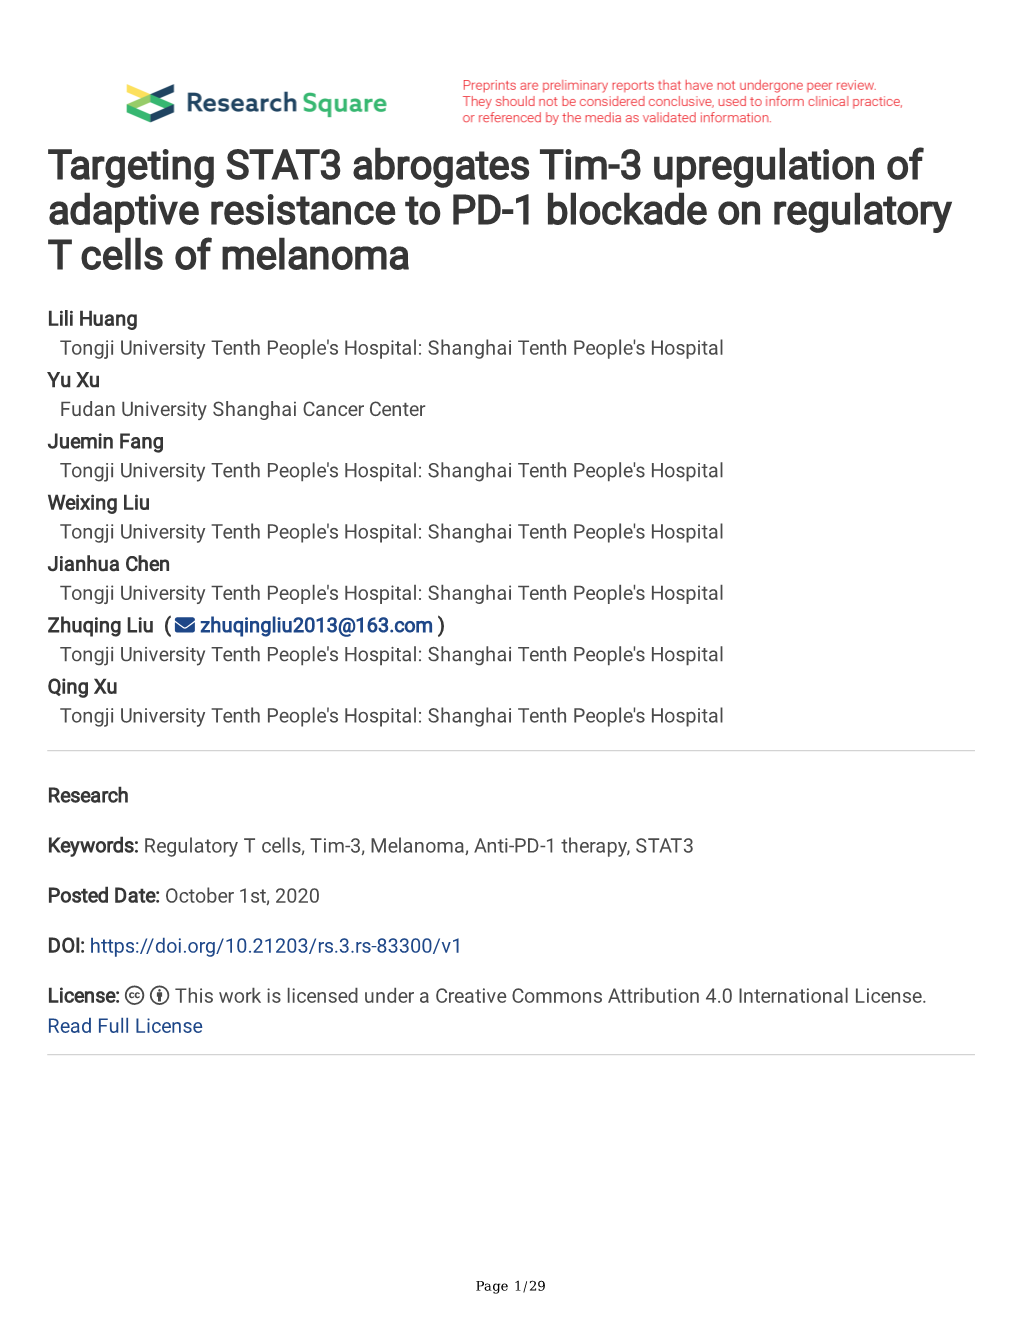 Targeting STAT3 Abrogates Tim-3 Upregulation of Adaptive Resistance to PD-1 Blockade on Regulatory T Cells of Melanoma